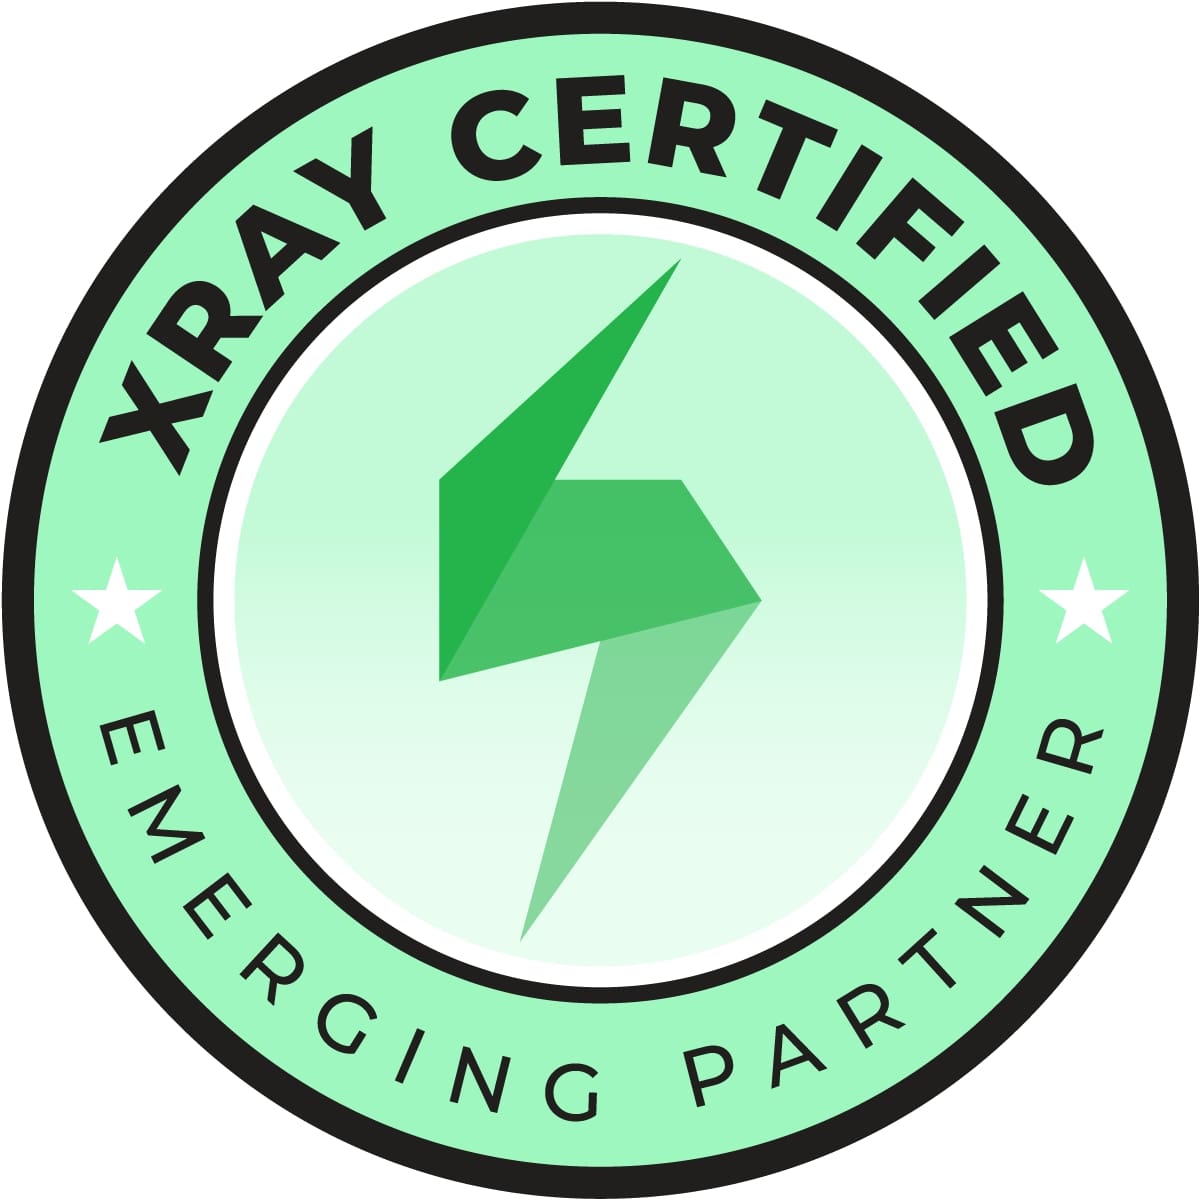 Xray certified badge